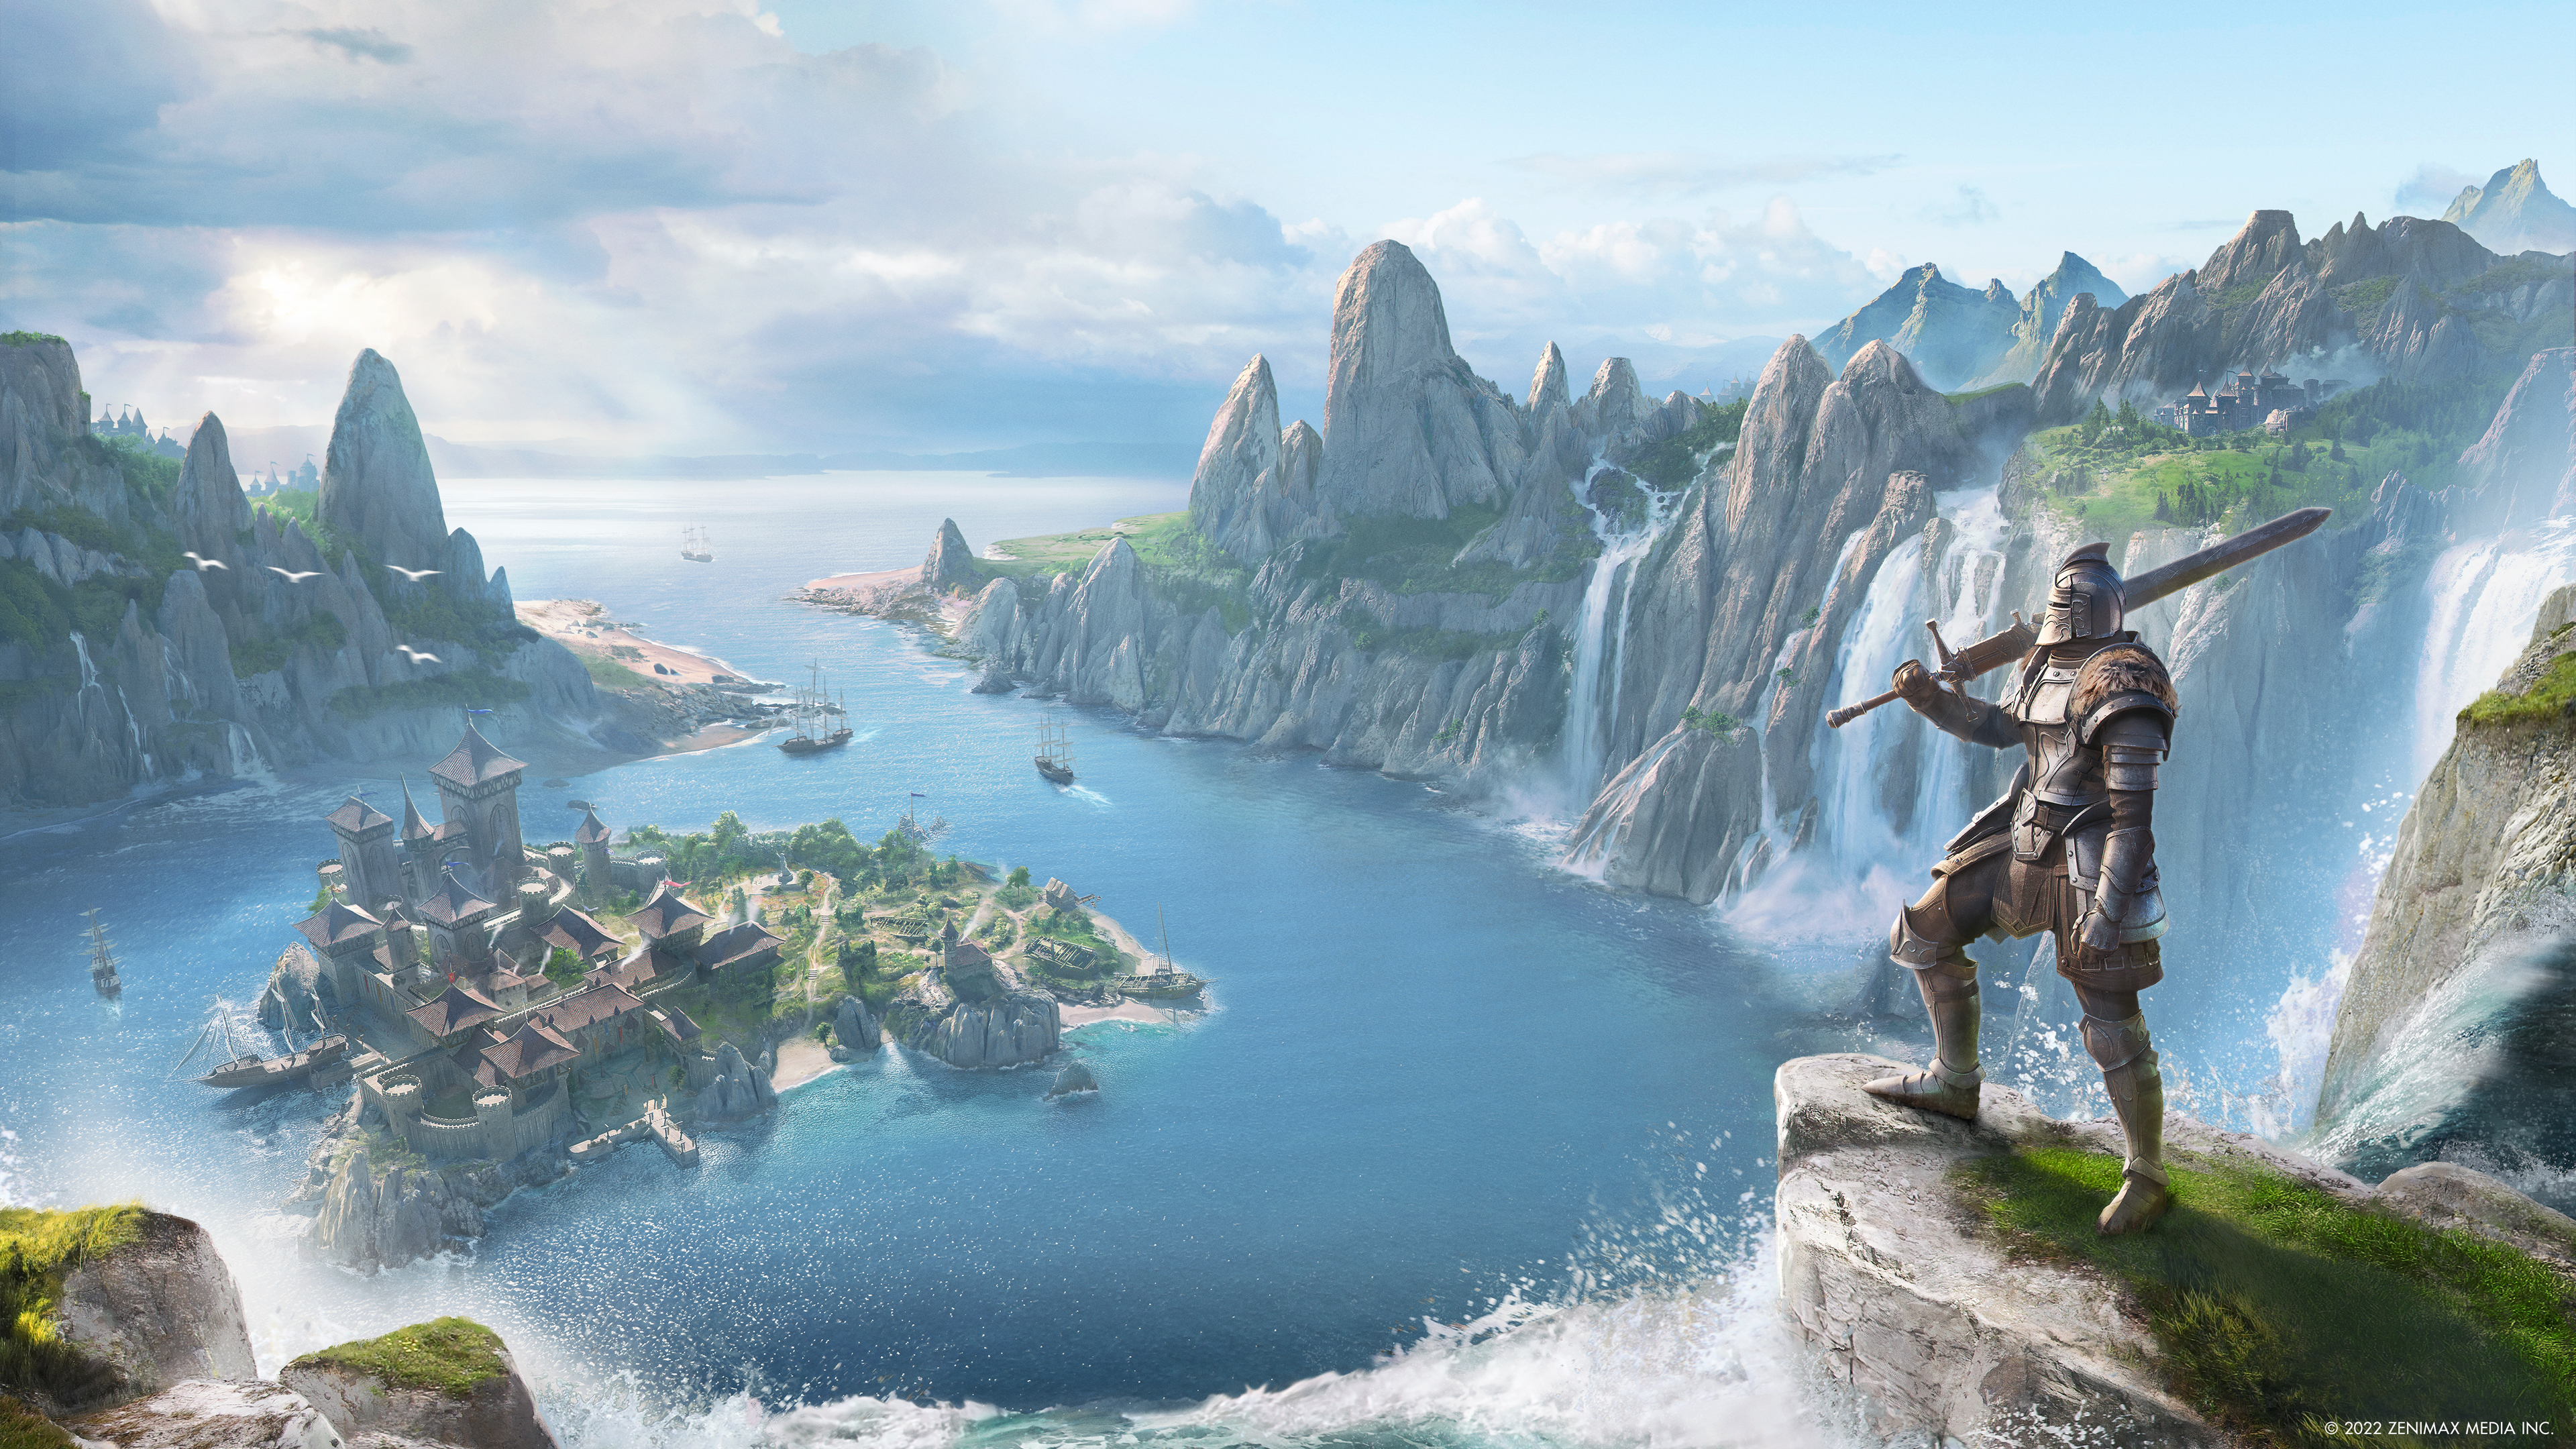 The Elder Scrolls® Online High Isle™  Collector's Edition Upgrade